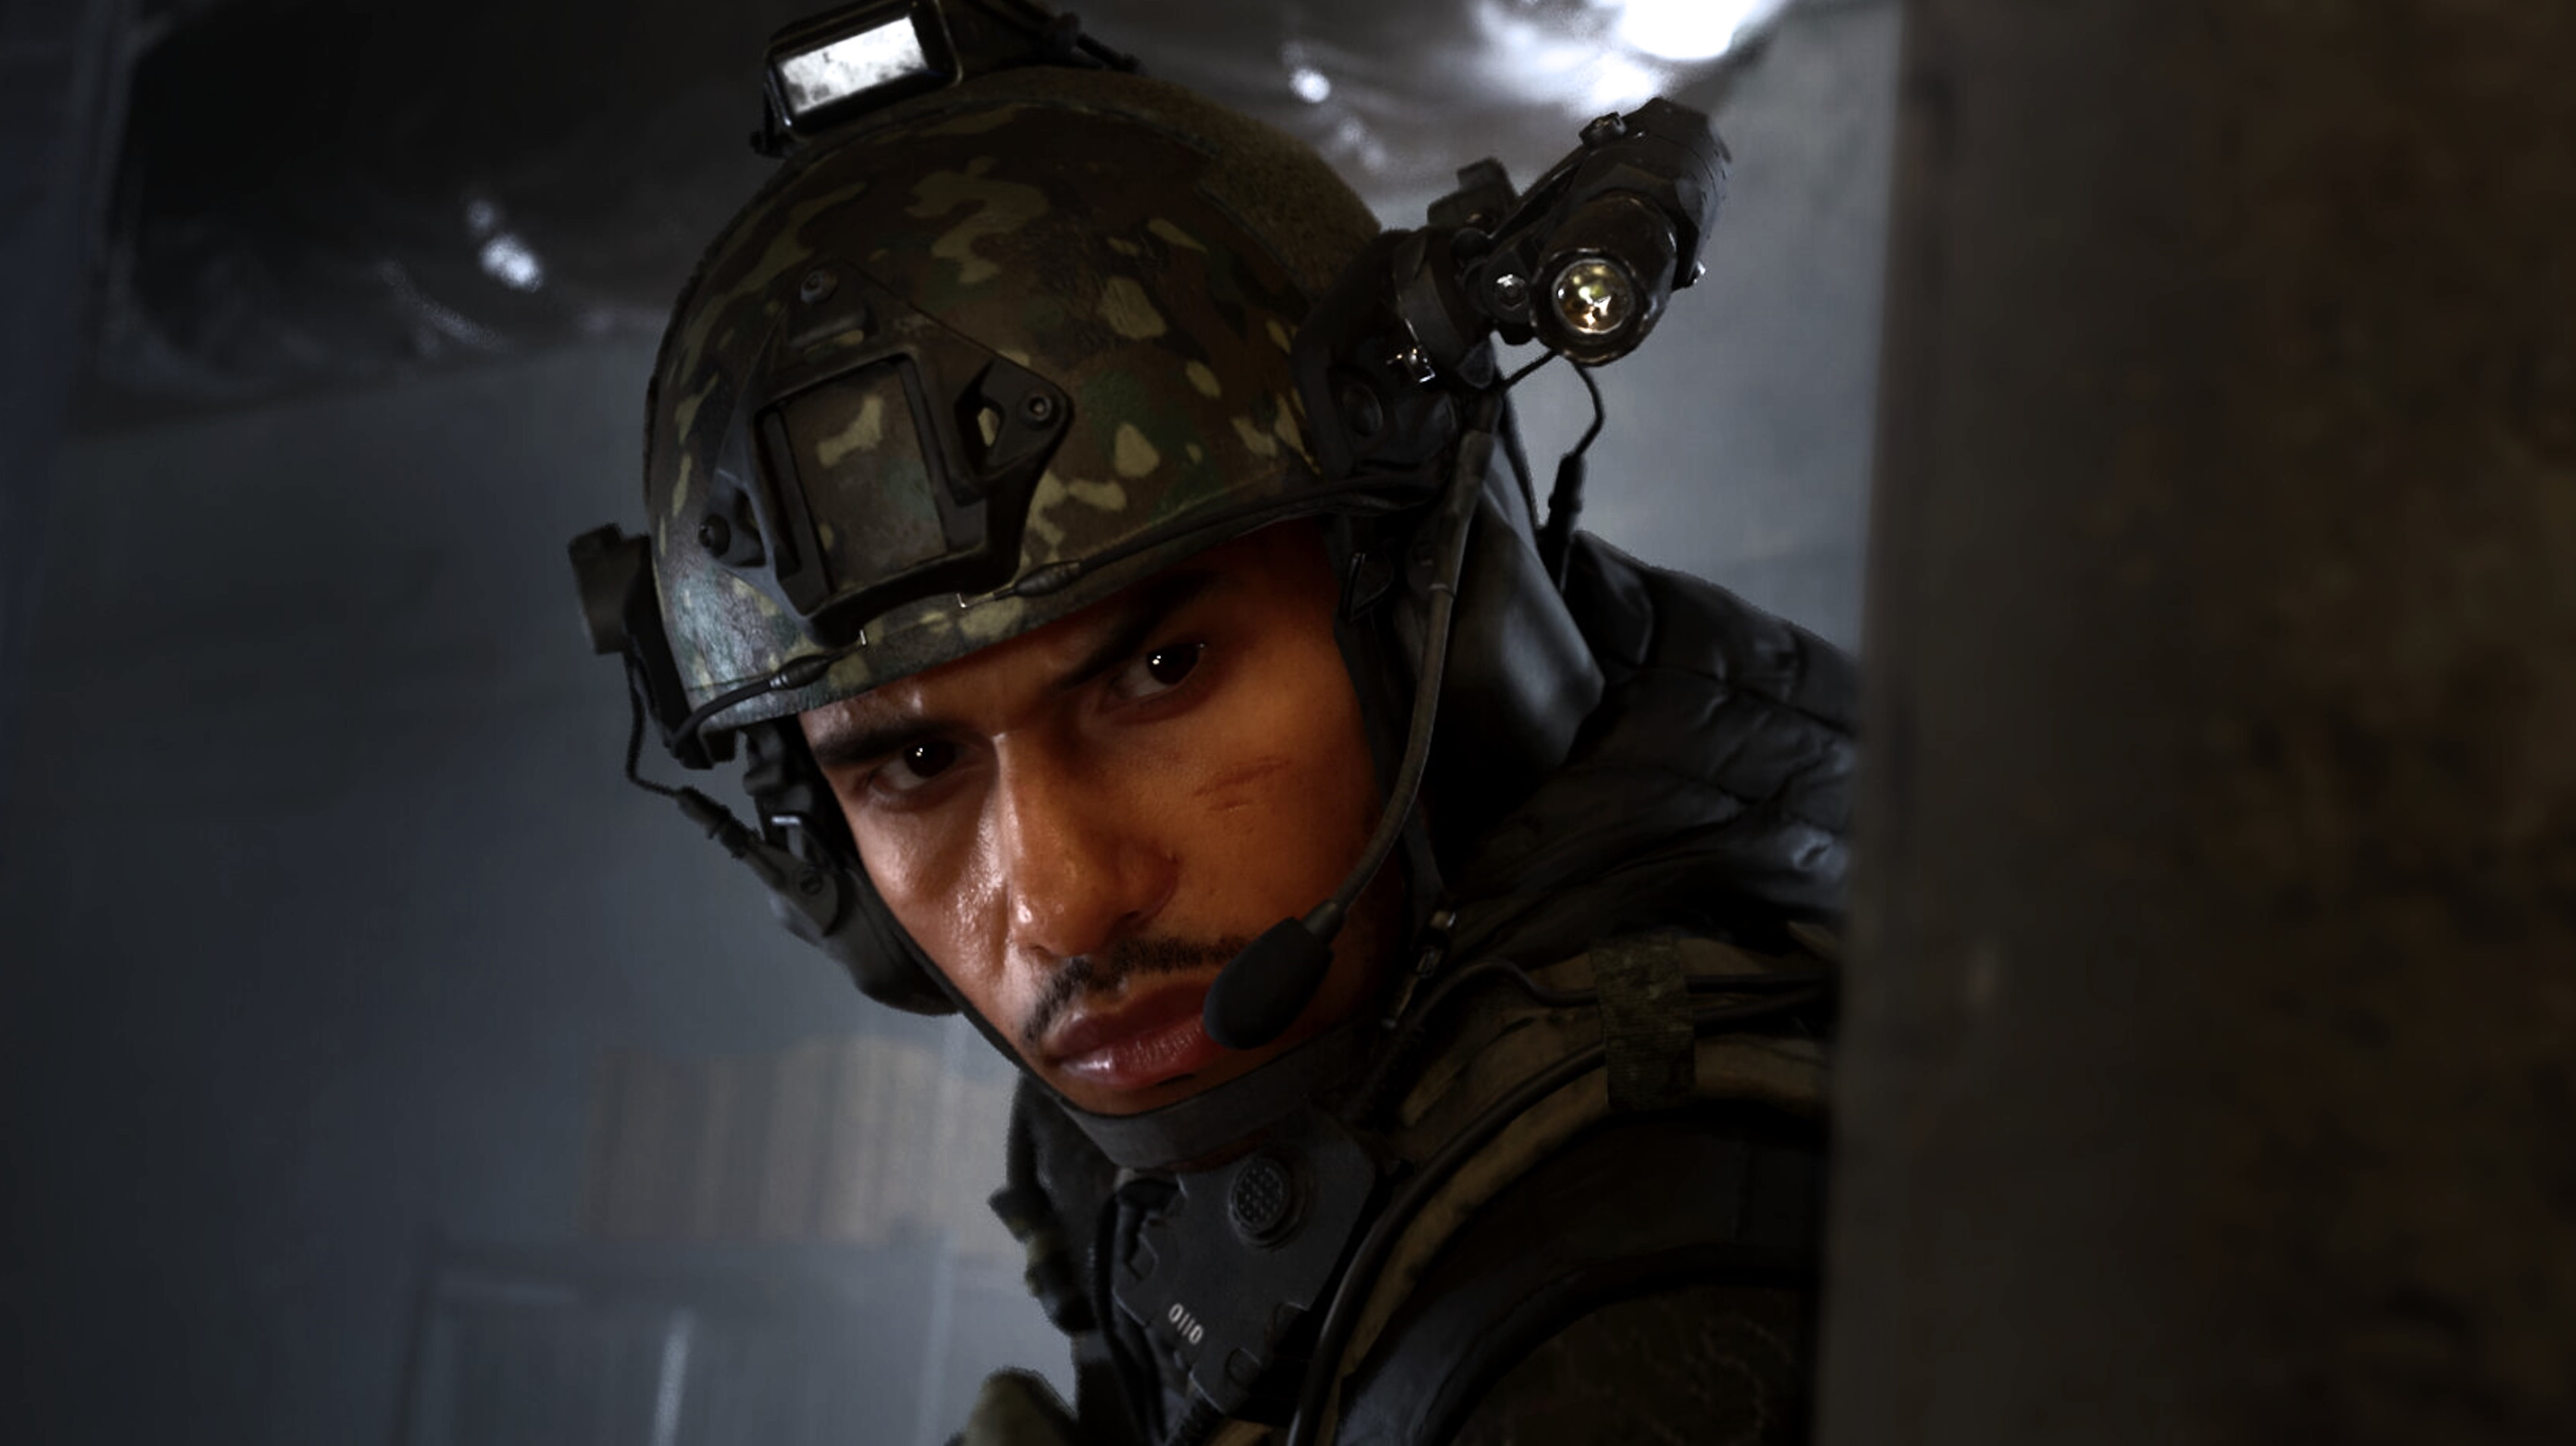 Call of Duty: Modern Warfare III' on GeForce NOW